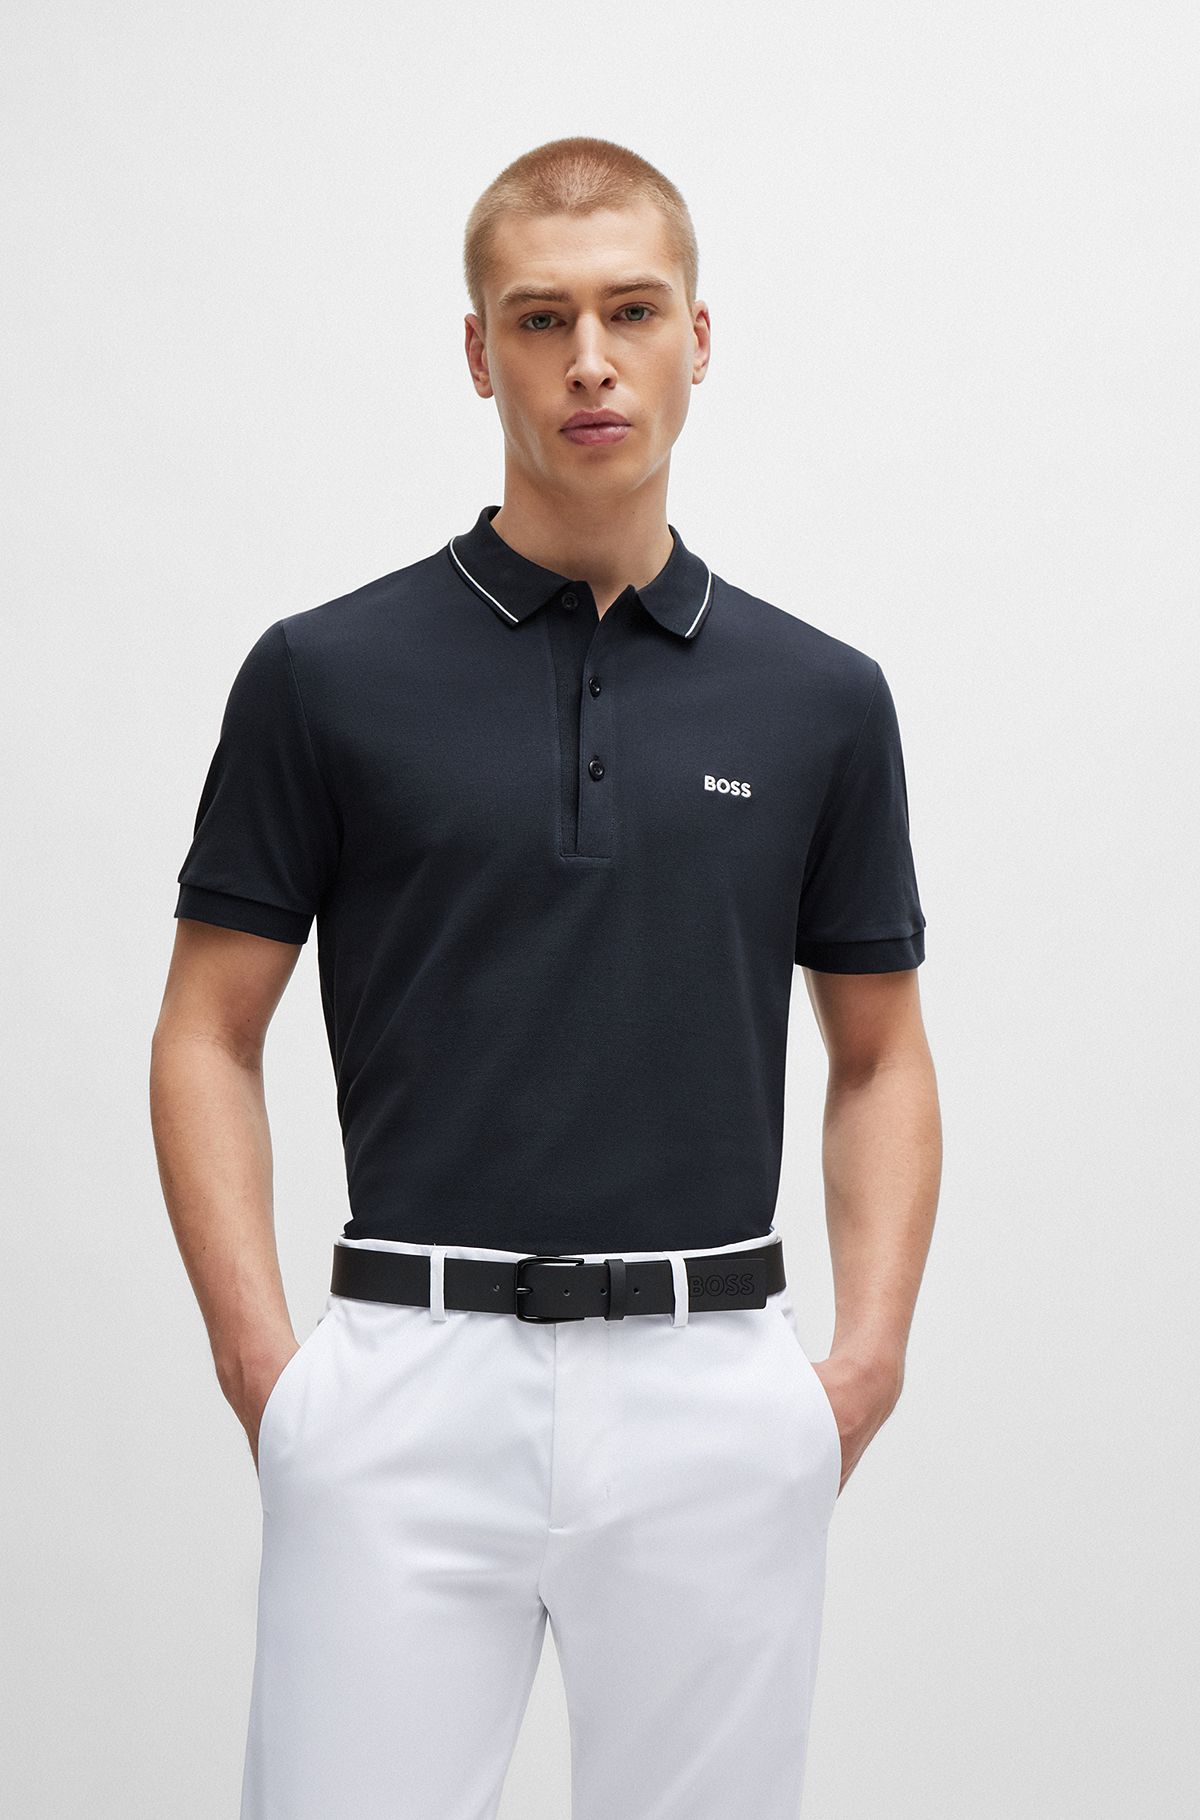 HUGO BOSS Polo Shirts – Elaborate designs | Men